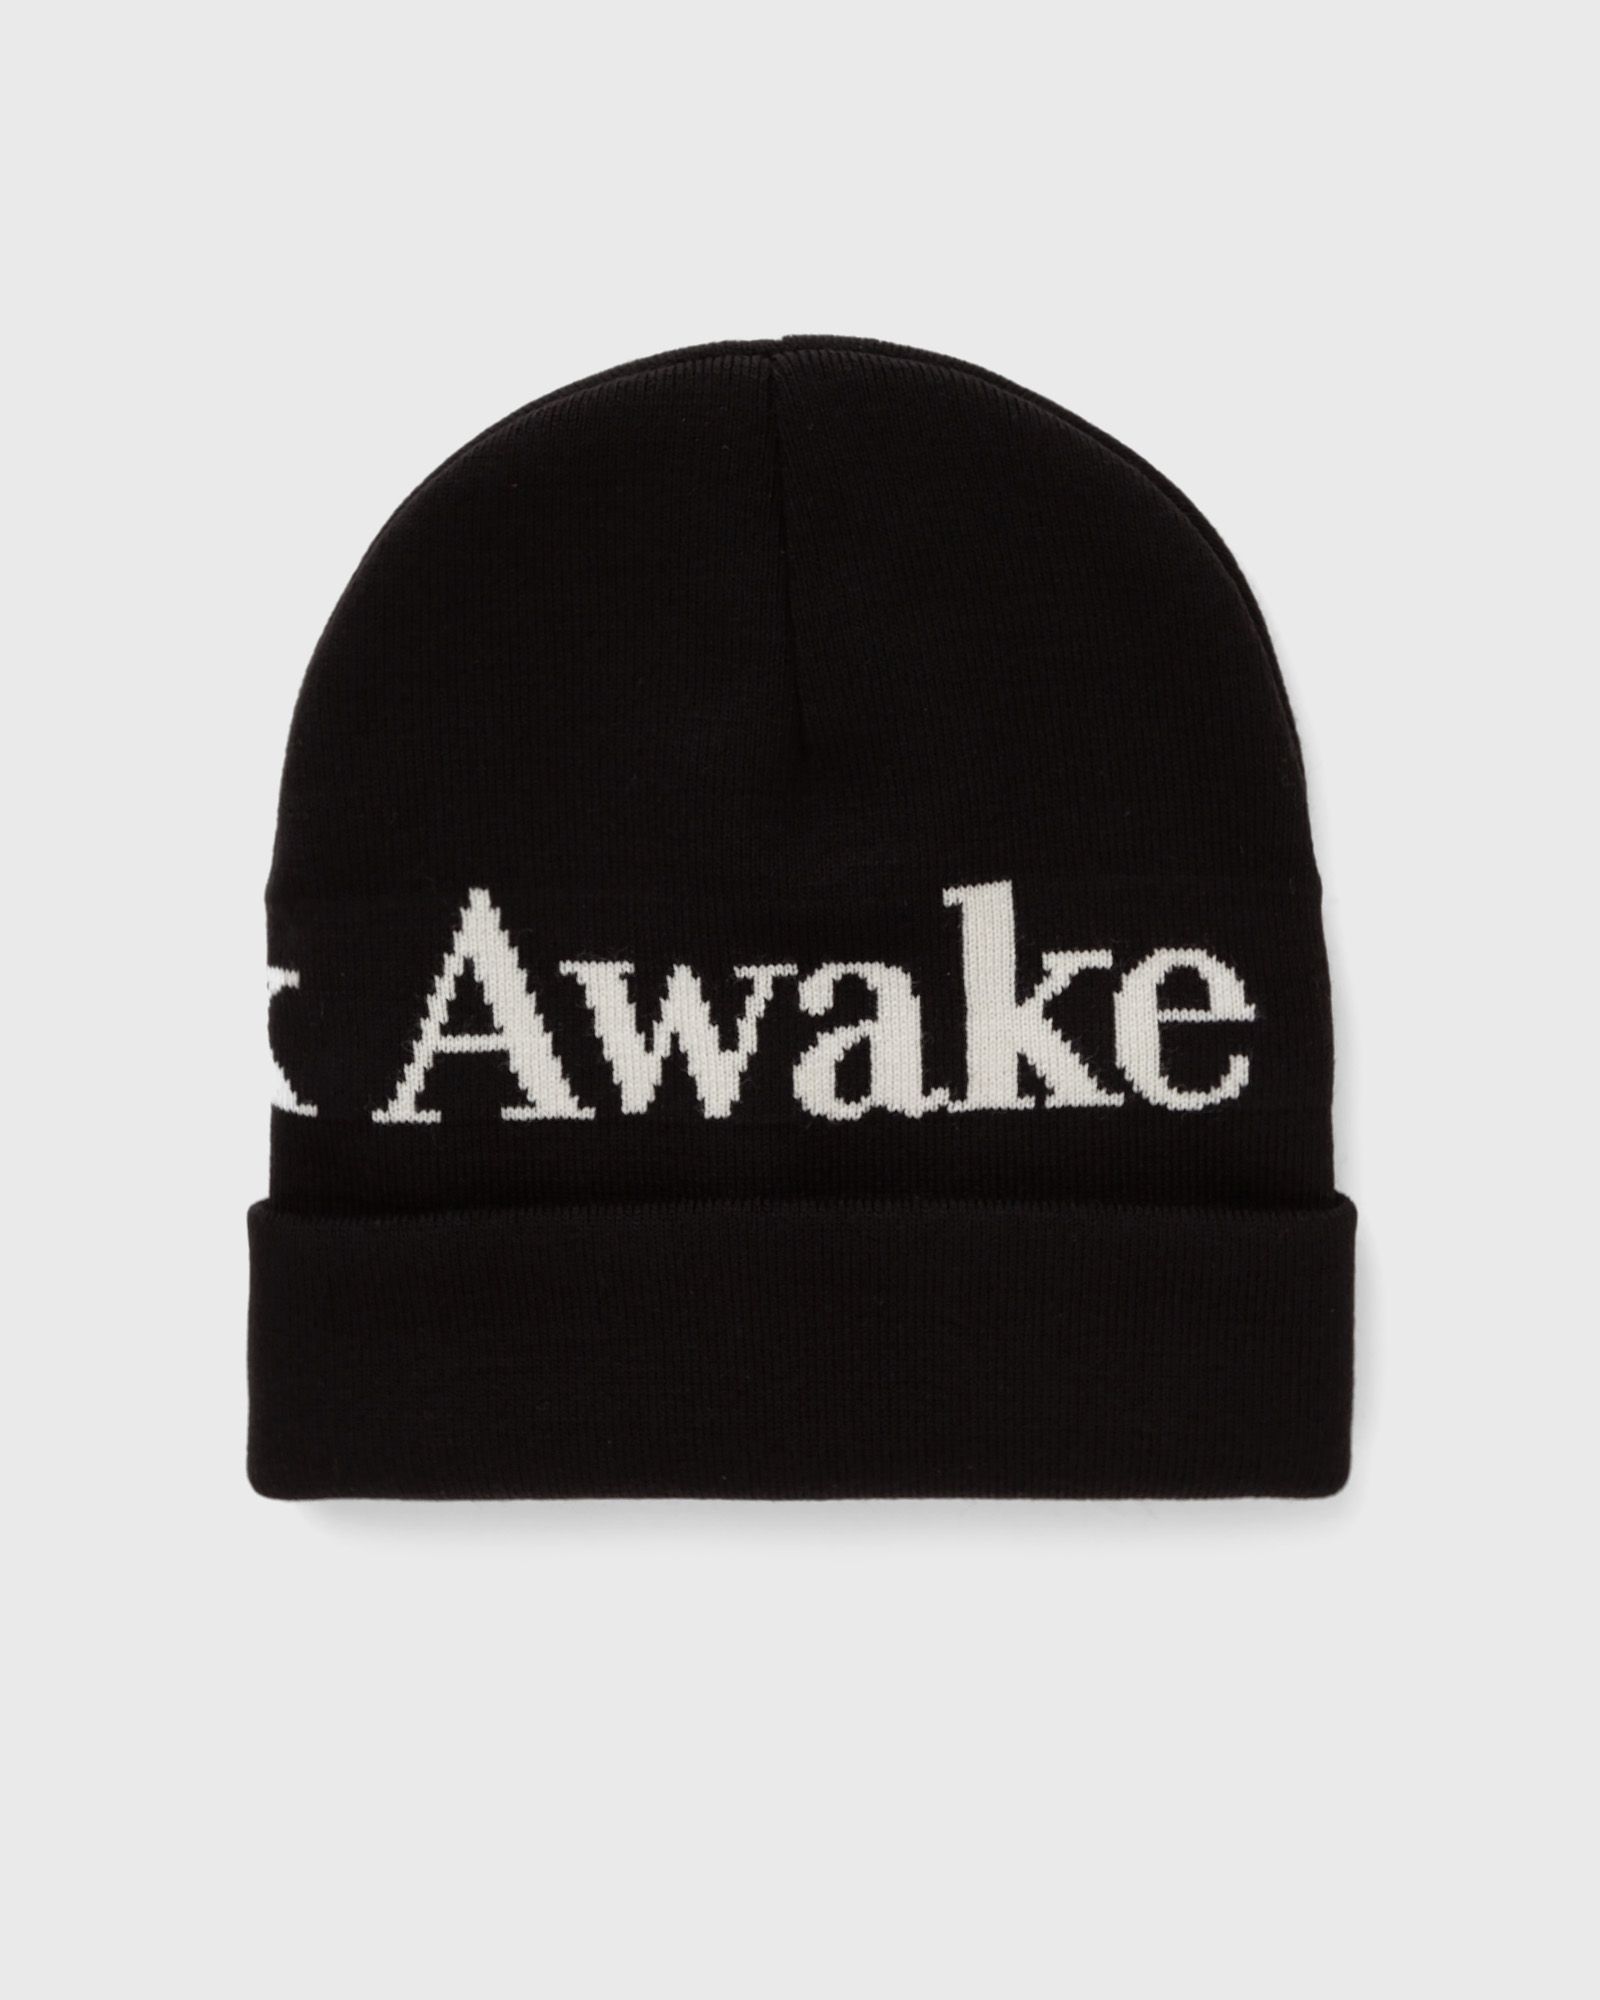 Awake - serif logo beanie men beanies black in größe:one size